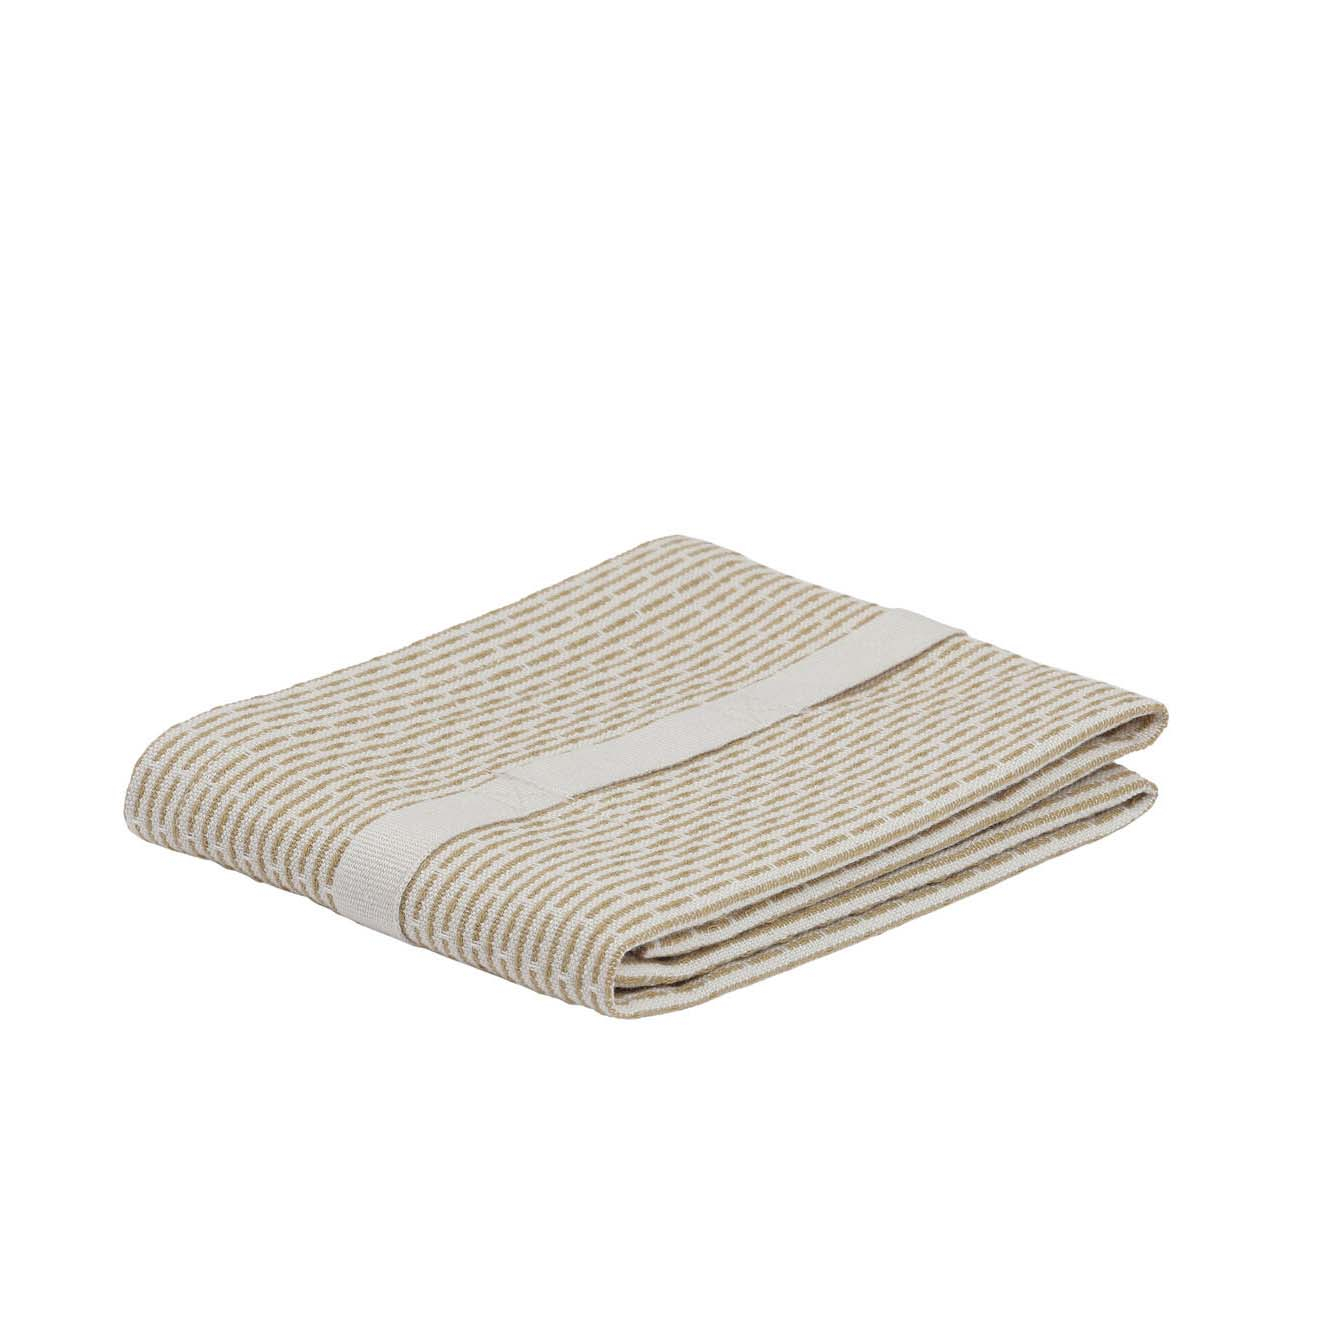 Håndklæde - 214 Lys beige / khaki 35 x 60 cm